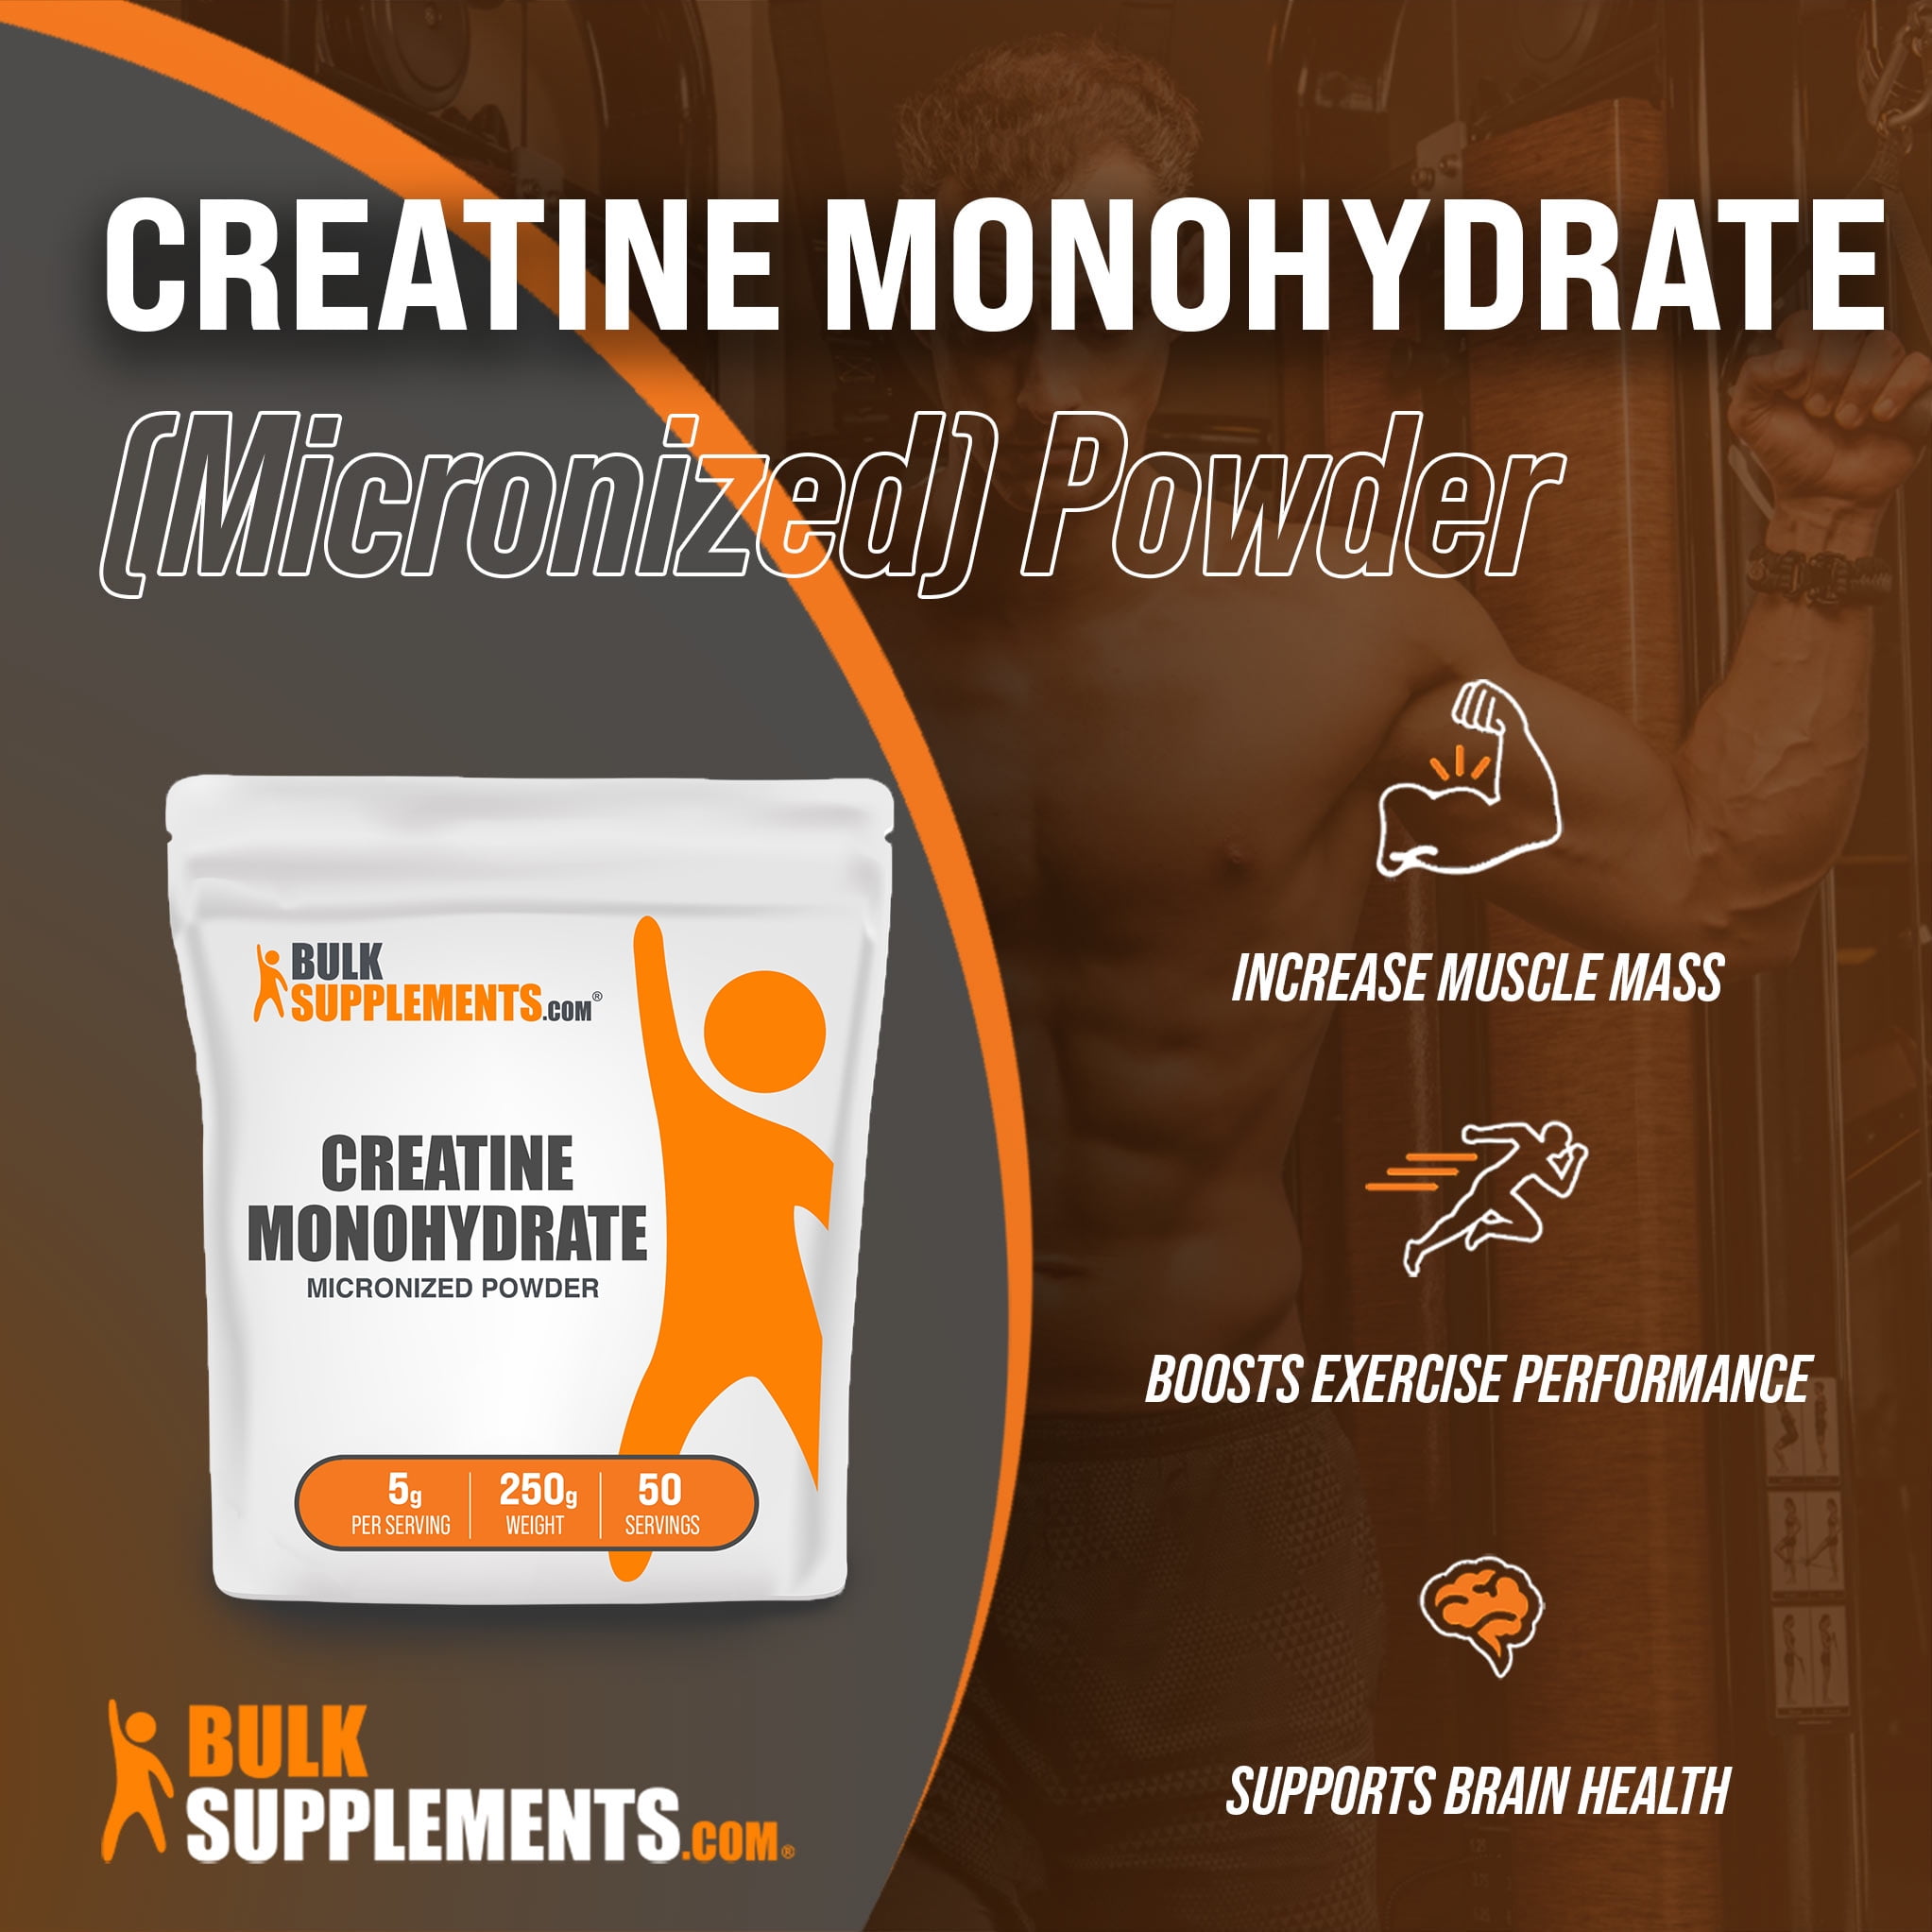 BULKSUPPLEMENTS.COM Creatine Monohydrate Capsules - Micronized Monohydrate,  Vegan Creatine, Pills 7 per Serving, 5000mg, Gluten Free, 210